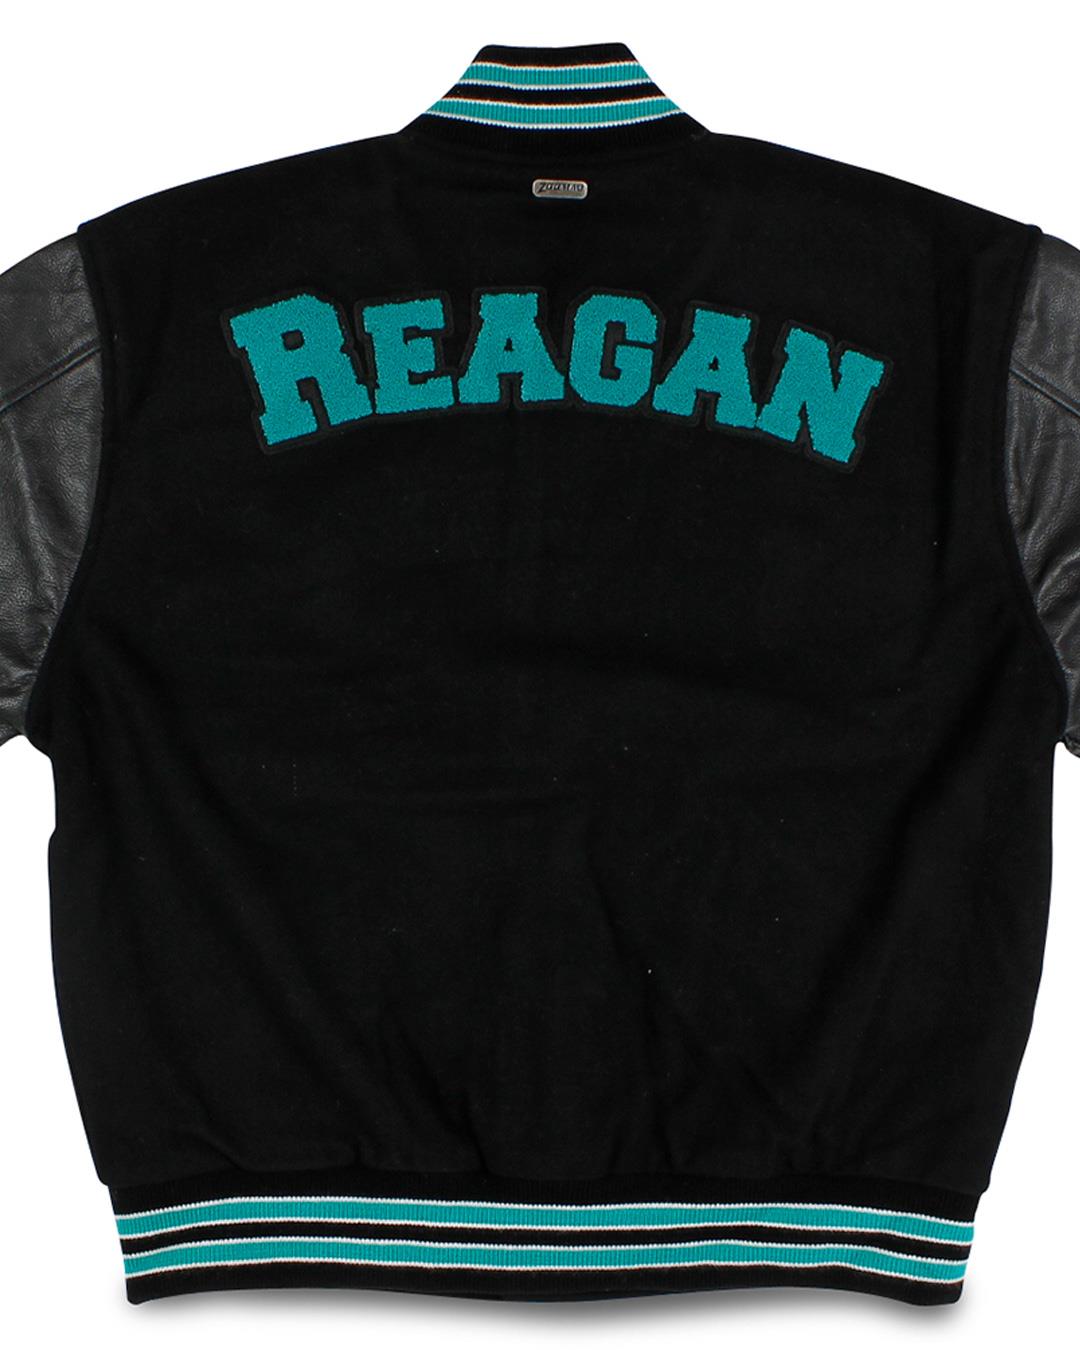 Ronald Reagan High School Letterman Jacket, Pfafftown NC - Back